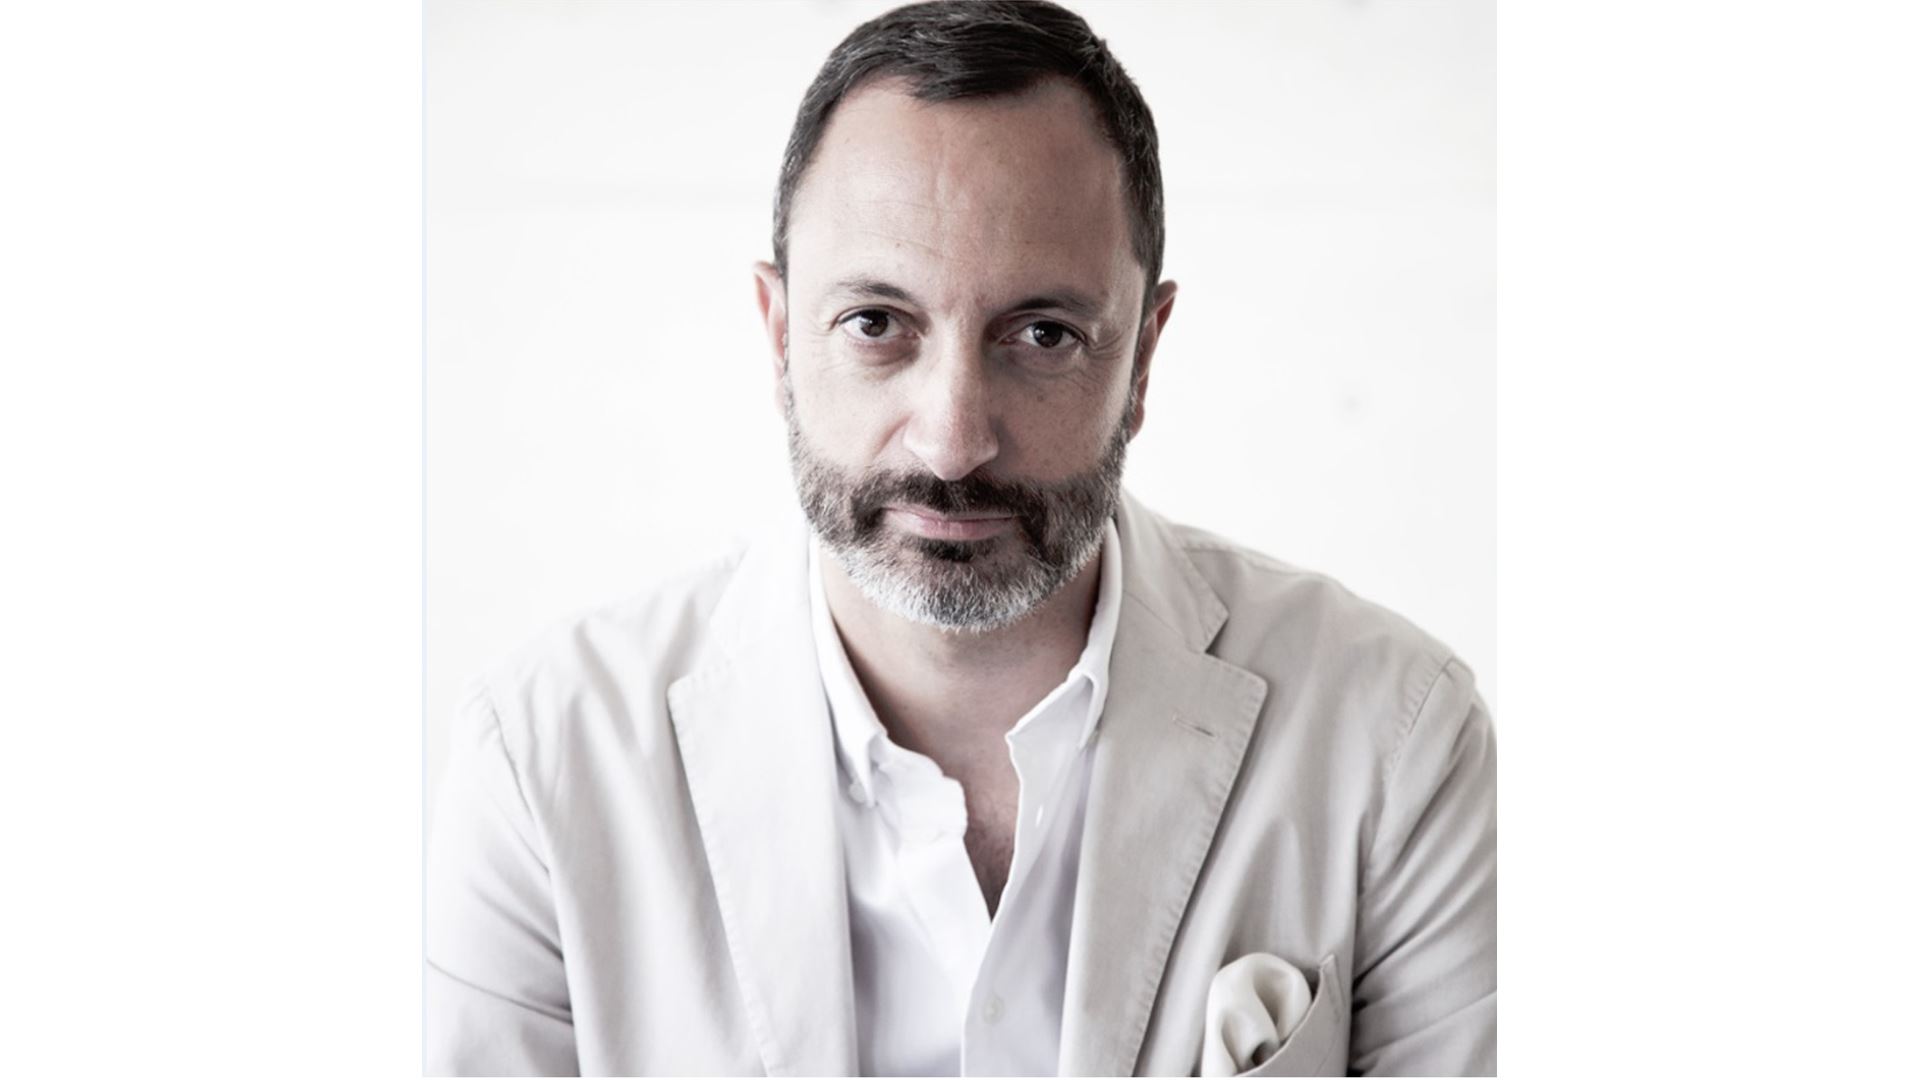 Karim Habib, Head of Kia Global Design, promoted to Executive Vice President